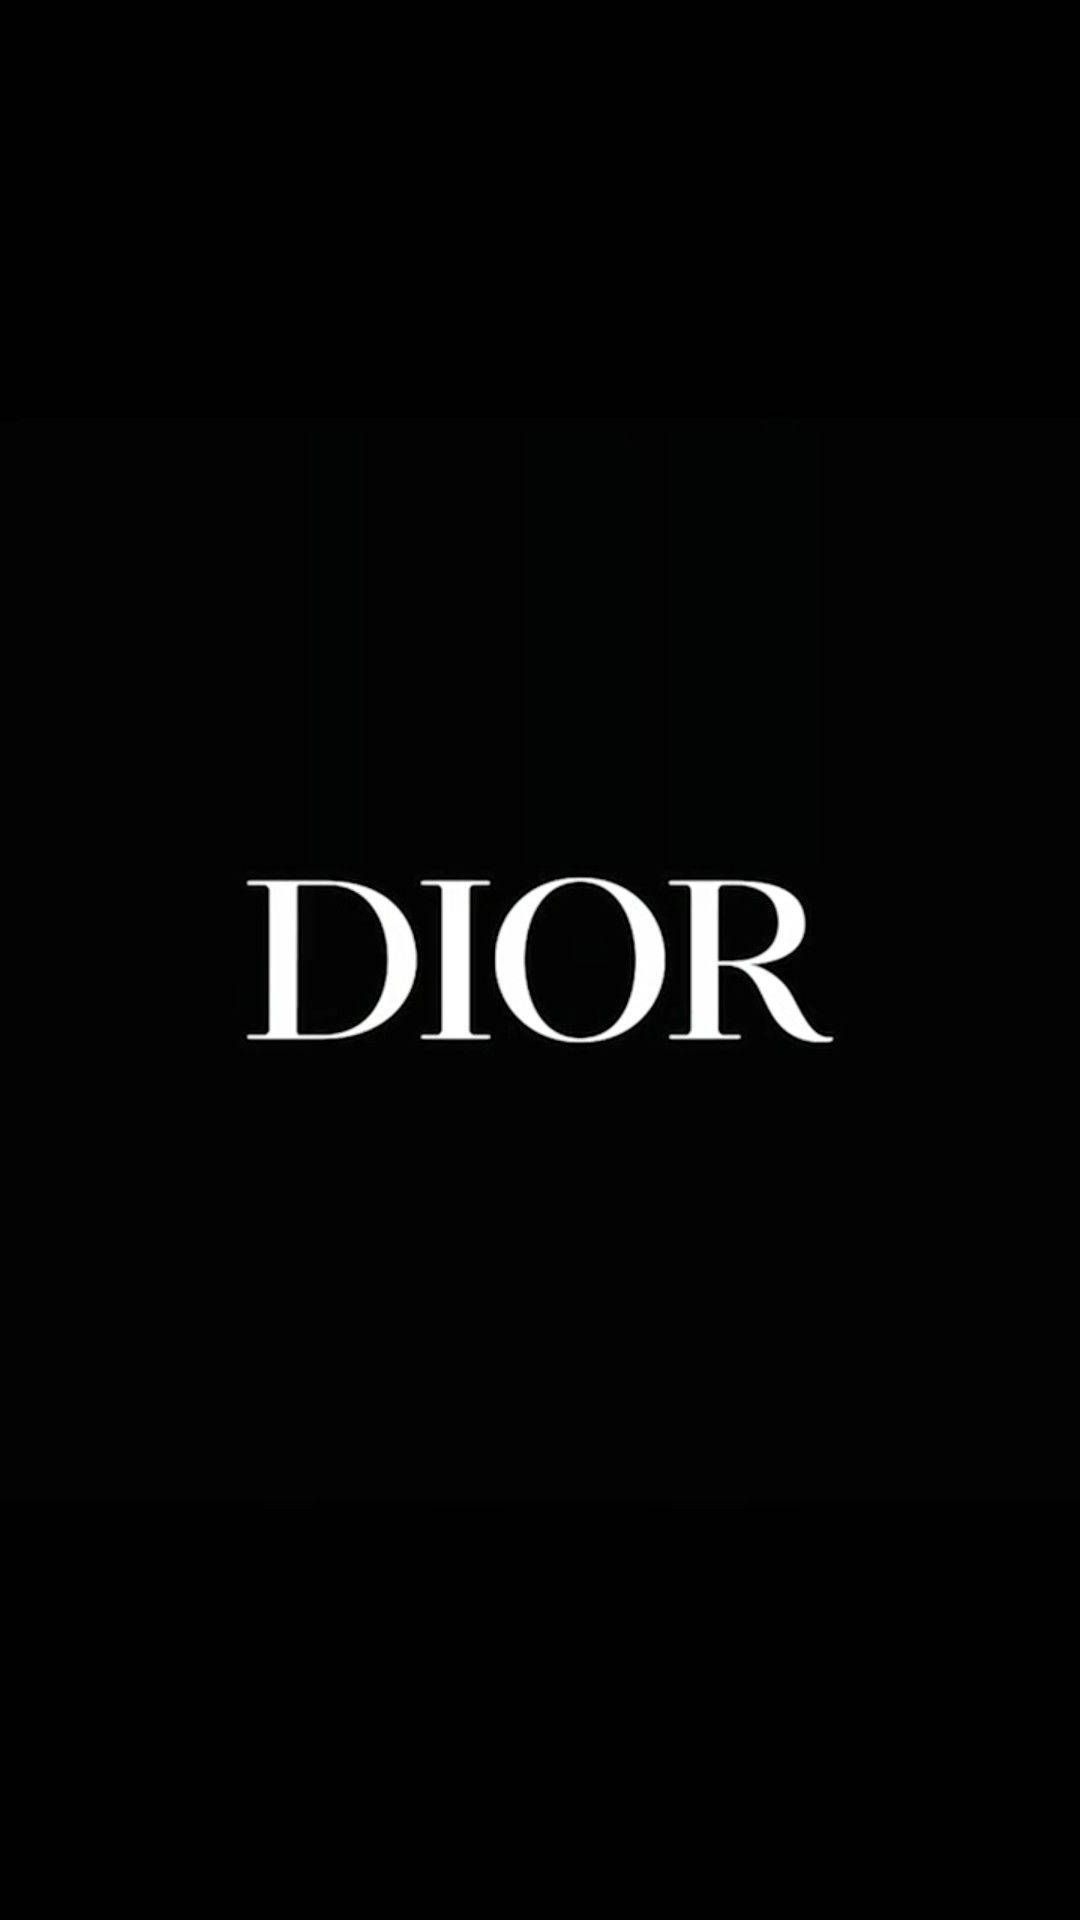 Free Dior Phone Wallpaper Downloads, Dior Phone Wallpaper for FREE